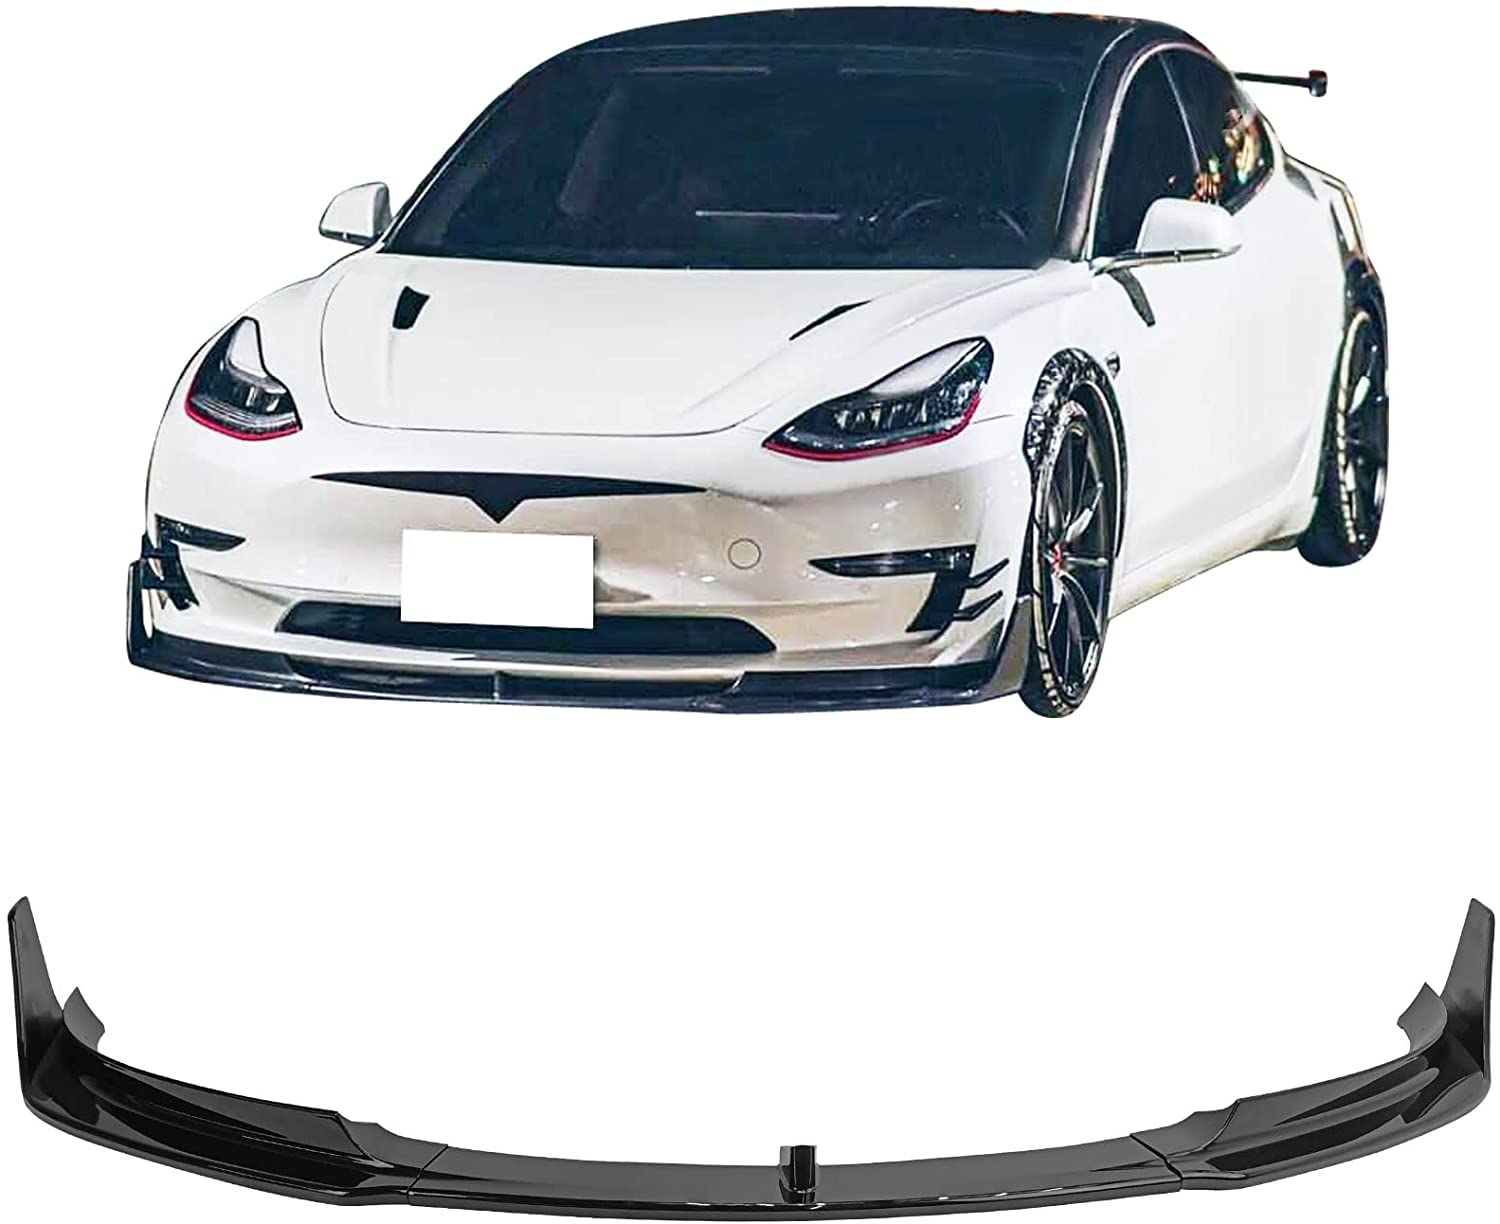 Tesla Model 3 Front Lip Spoiler V Style - Real Carbon Fiber - Tesery Official Store